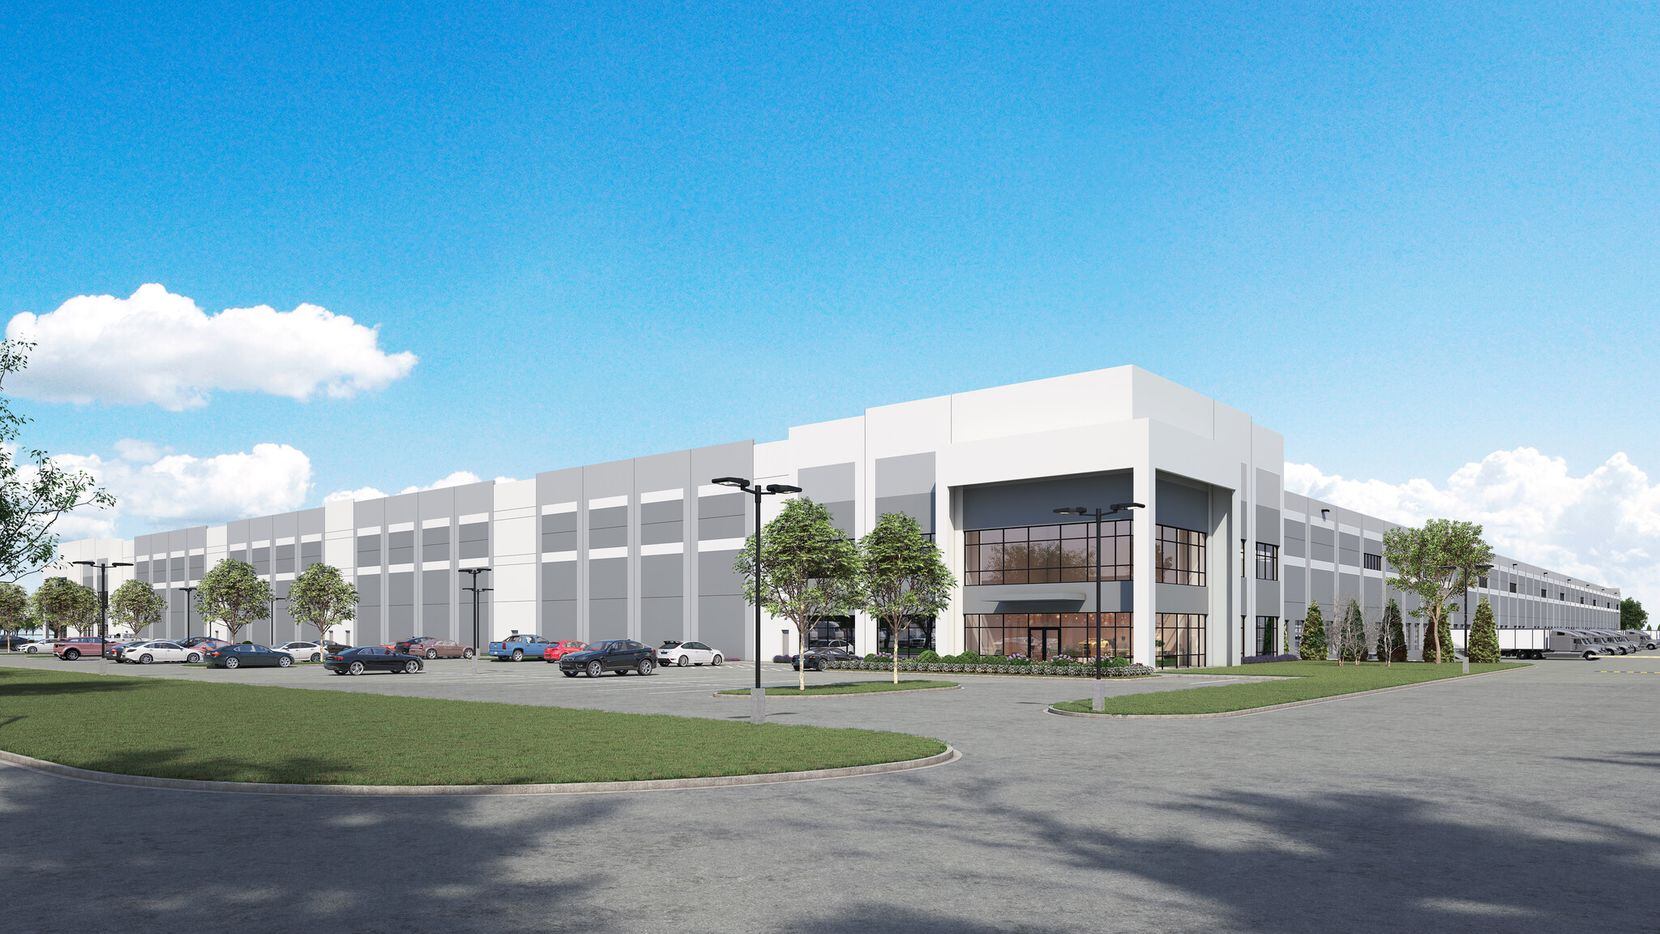 IAC Properties is planning the new warehouse near I-45 on Wintergreen Road.